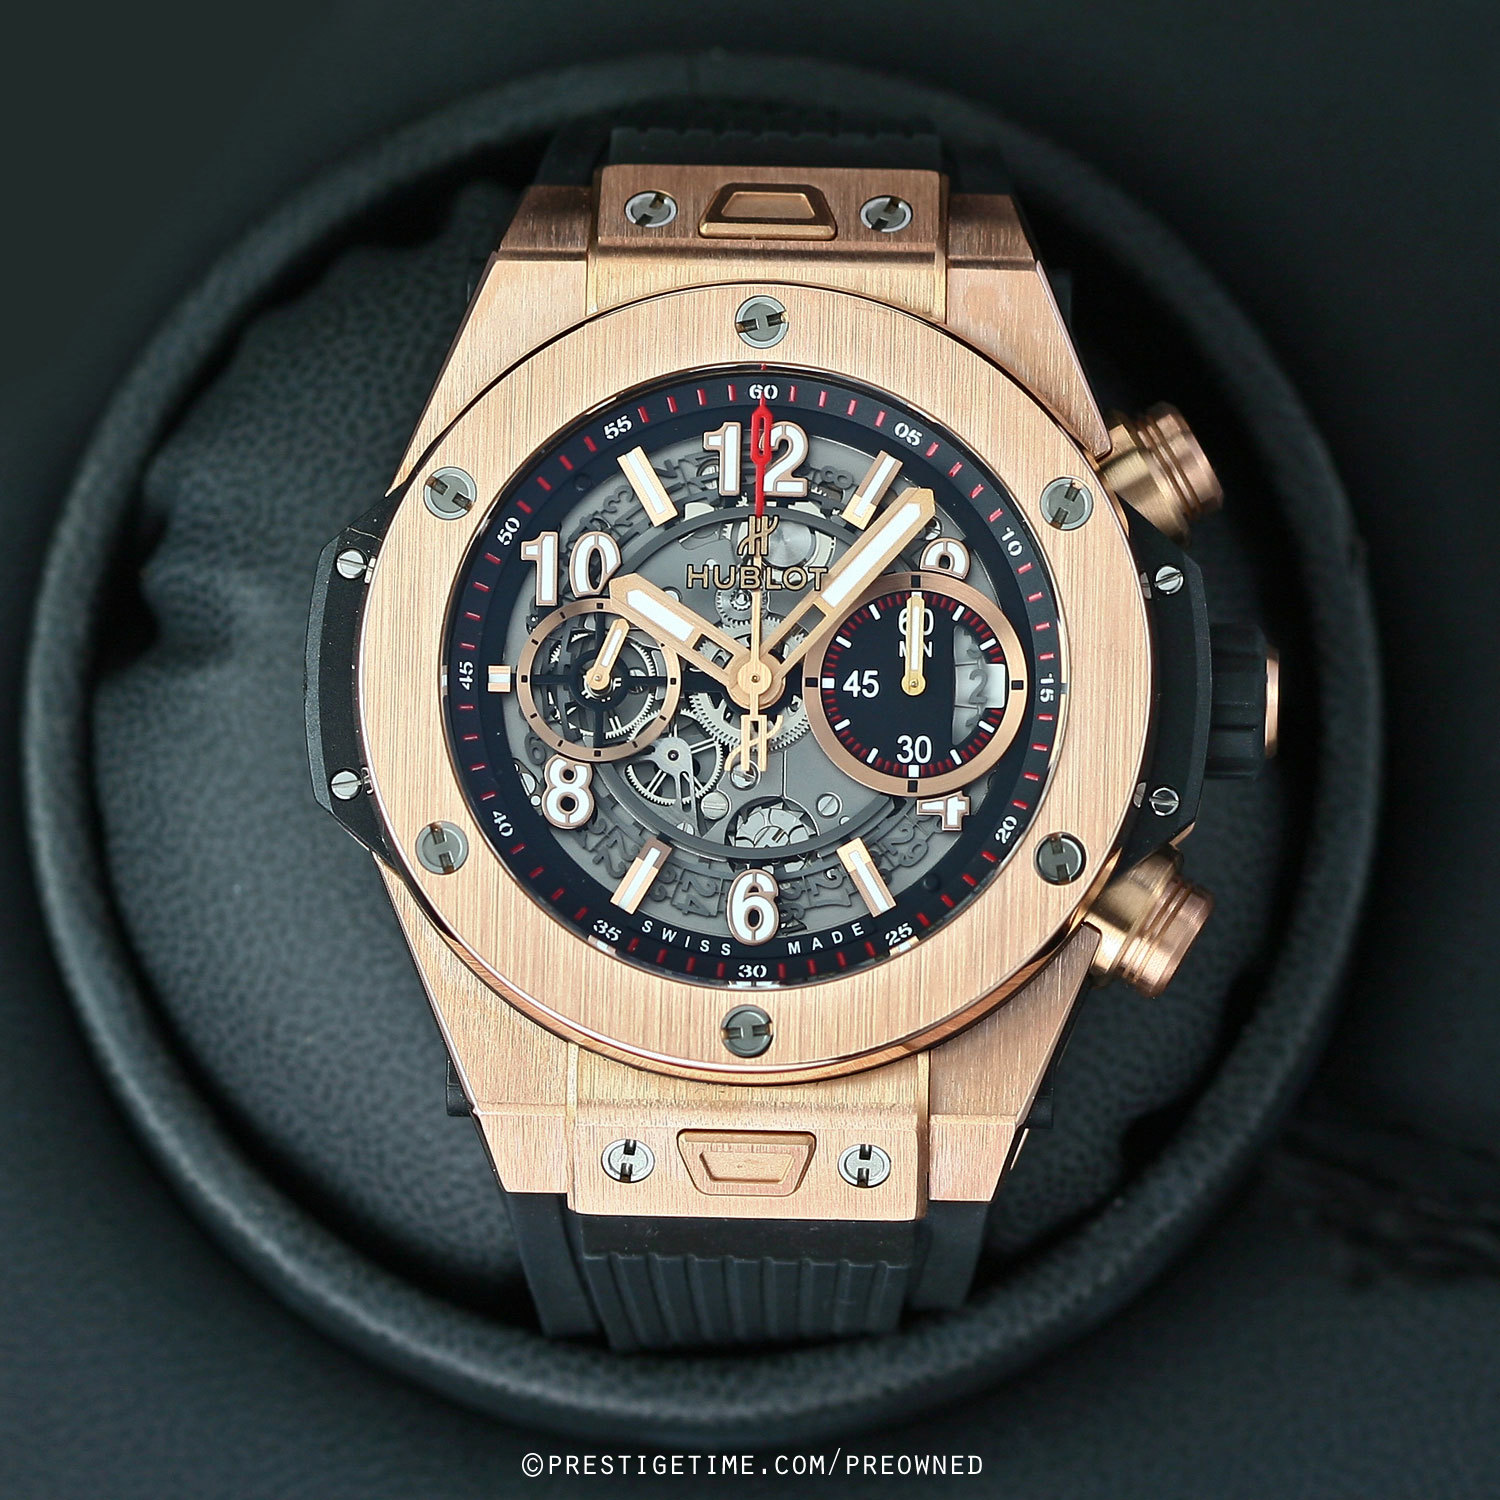 Hublot Big Bang Unico 411.OX.1180.RX Men's Watch in 18kt Titanium/Rose Gold